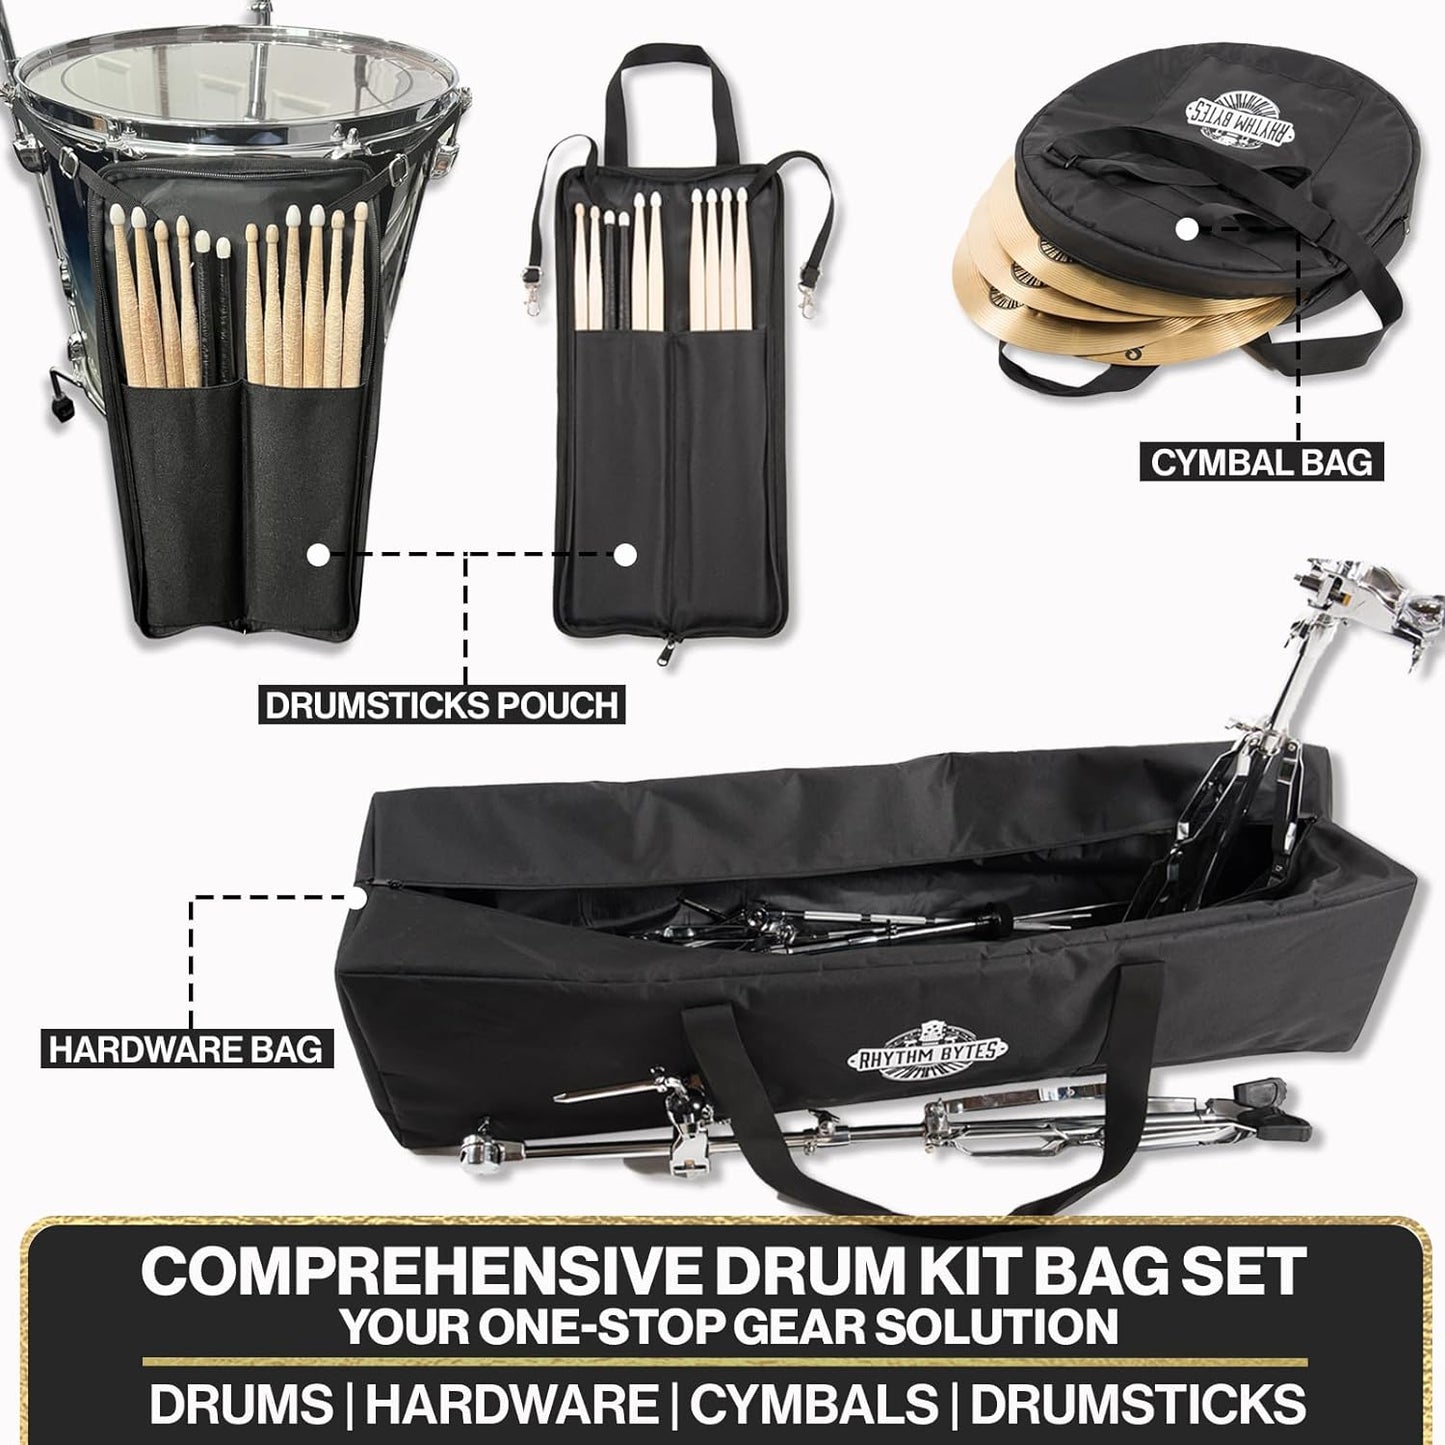 Rhythm Bytes Drum Bags Set, 9-pcs Drum cases Include 10" Tom Bag, 12" Tom Bag, 13" Tom Bag, 16" Tom Bag, 14" snare drum bag, 22" Bass drum case, Large drum hardware bag, Cymbal Bag & Drum stick bag